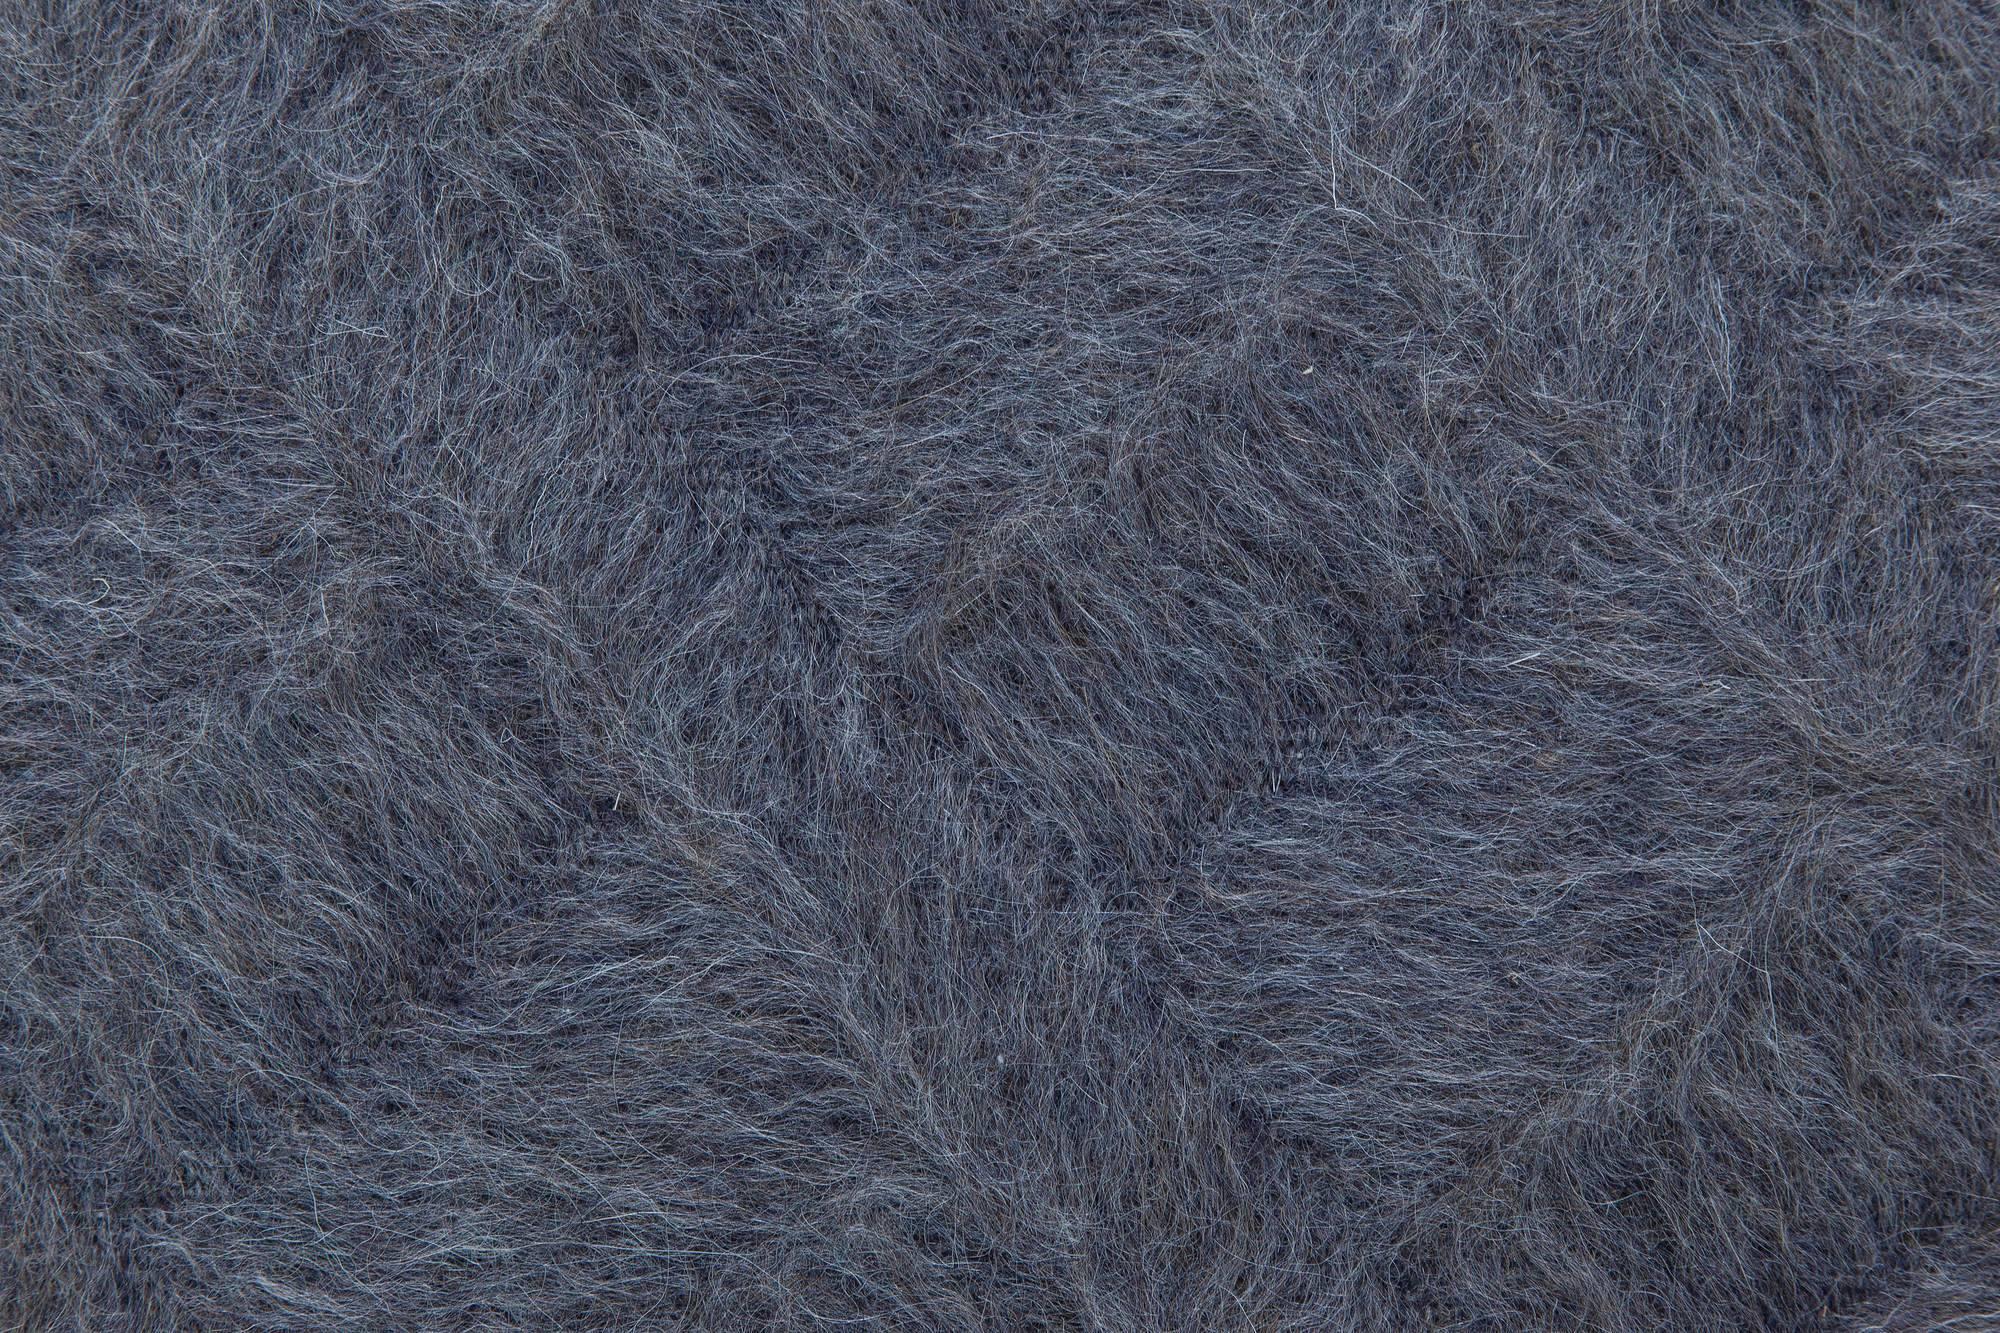 Modern geometric goat hair rug by Doris Leslie Blau.
Size: 6'3